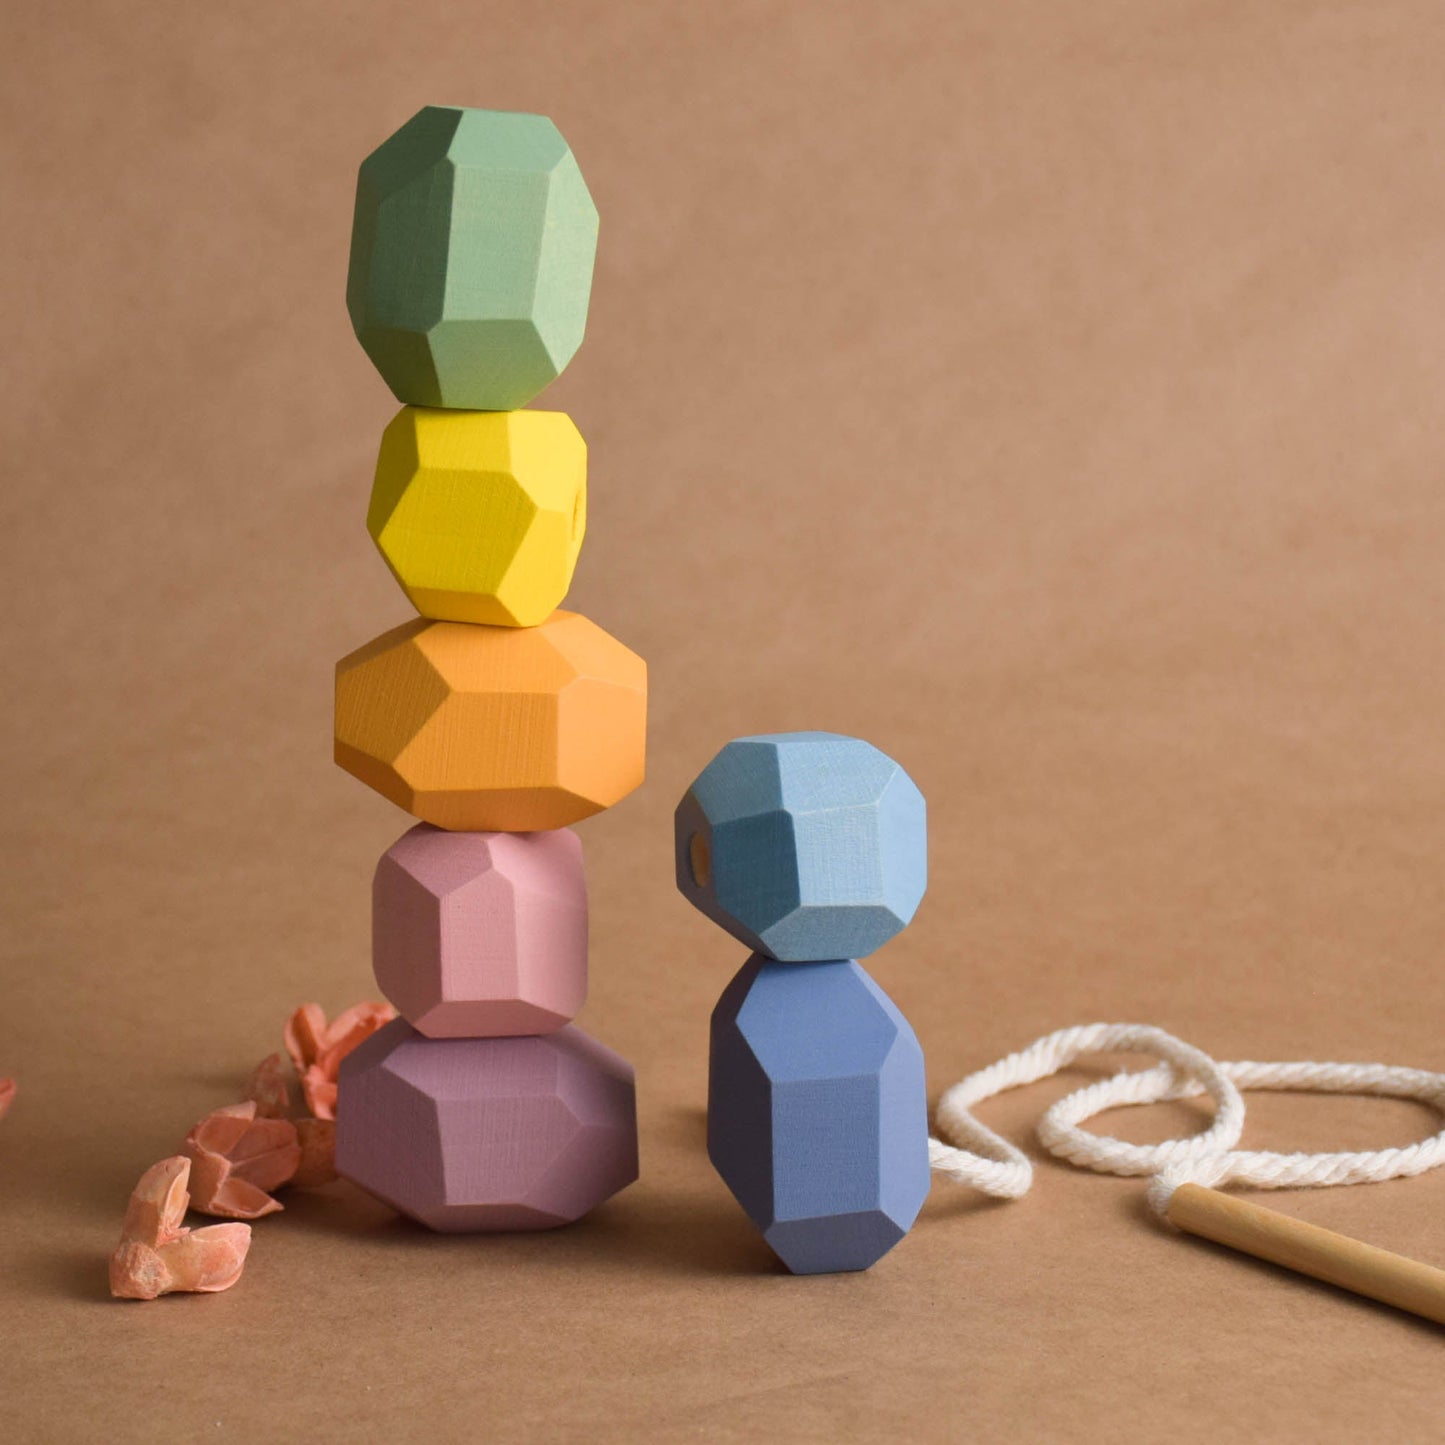 Schnürspielzeug Holz Baby balanciert unfertige Blöcke